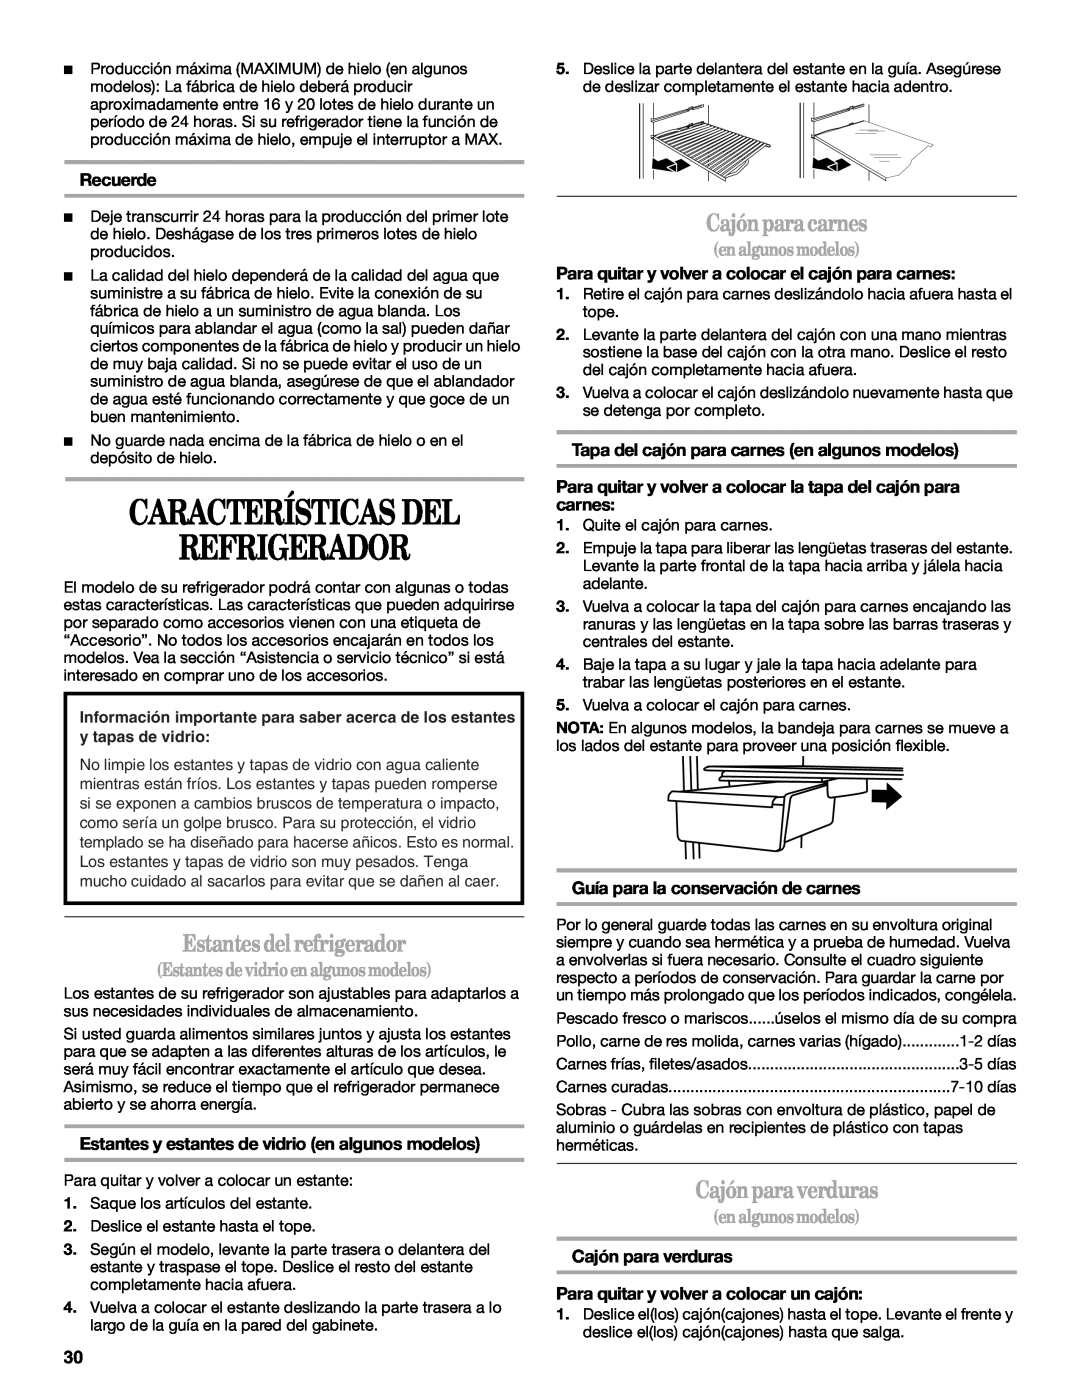 Whirlpool W4TXNWFWQ manual Refrigerador, Características Del, Estantes delrefrigerador, Cajónparacarnes, Cajónparaverduras 